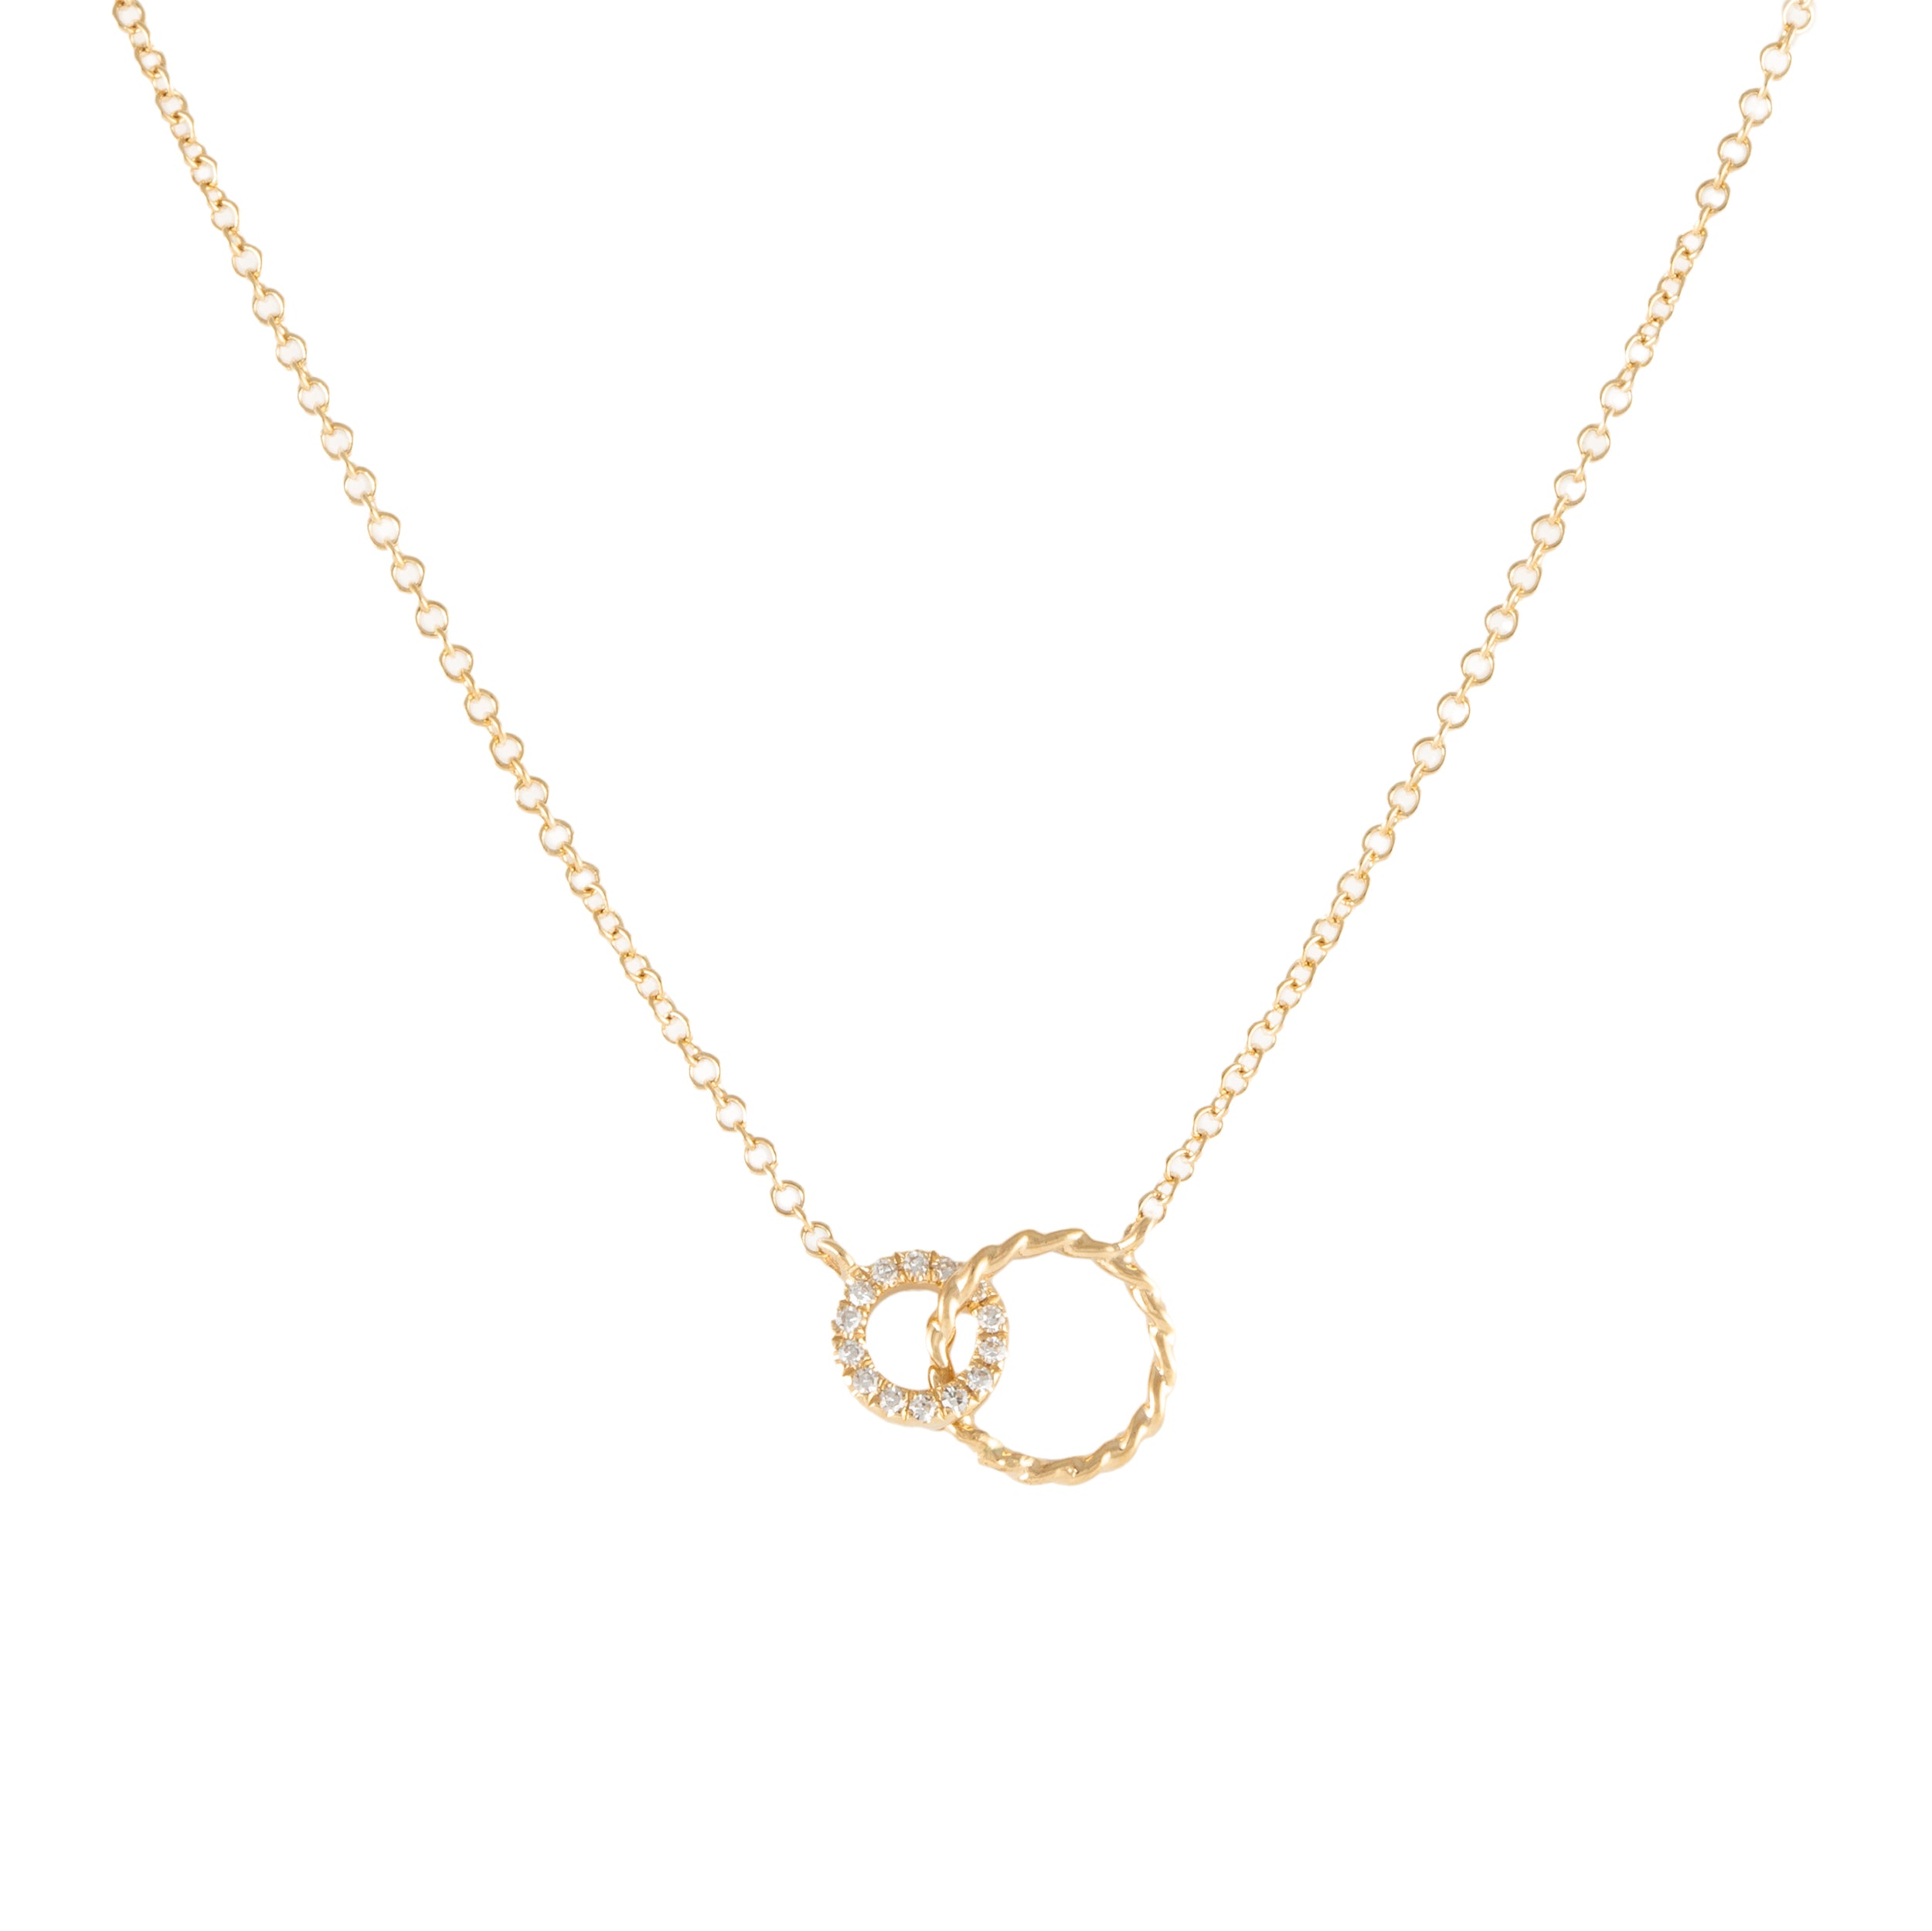 Sam's 9ct Rose Gold and 18ct White Gold Interlocking Circle Pendant